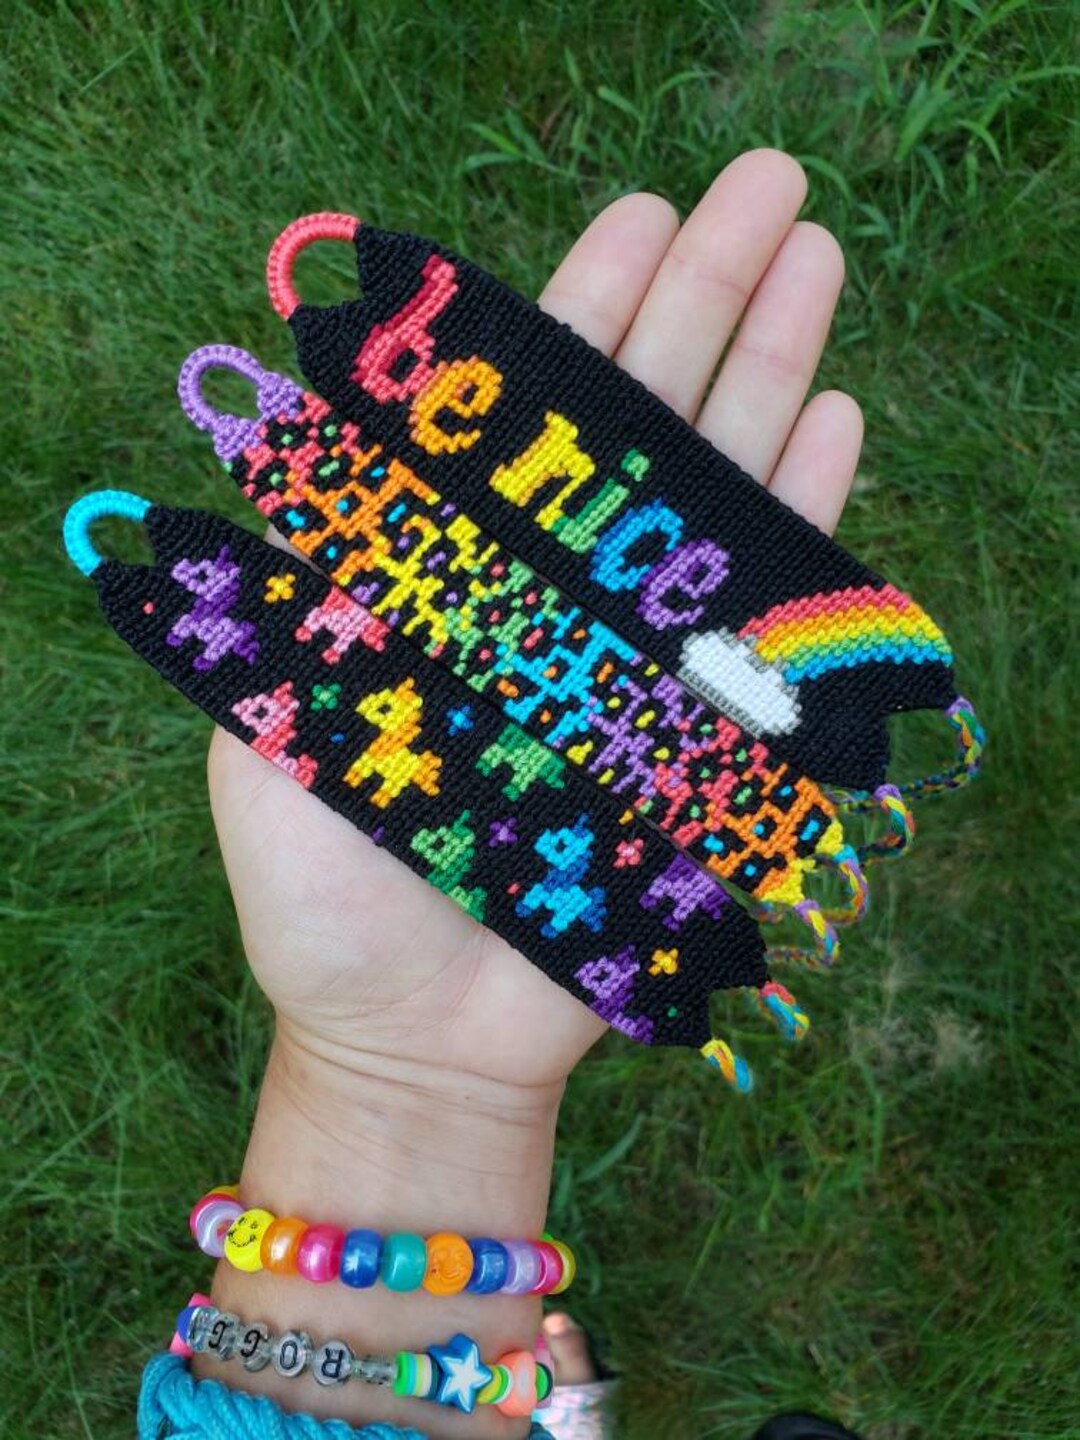 Muted Rainbow Friendship Bracelet Set Six Handmade Bracelets in